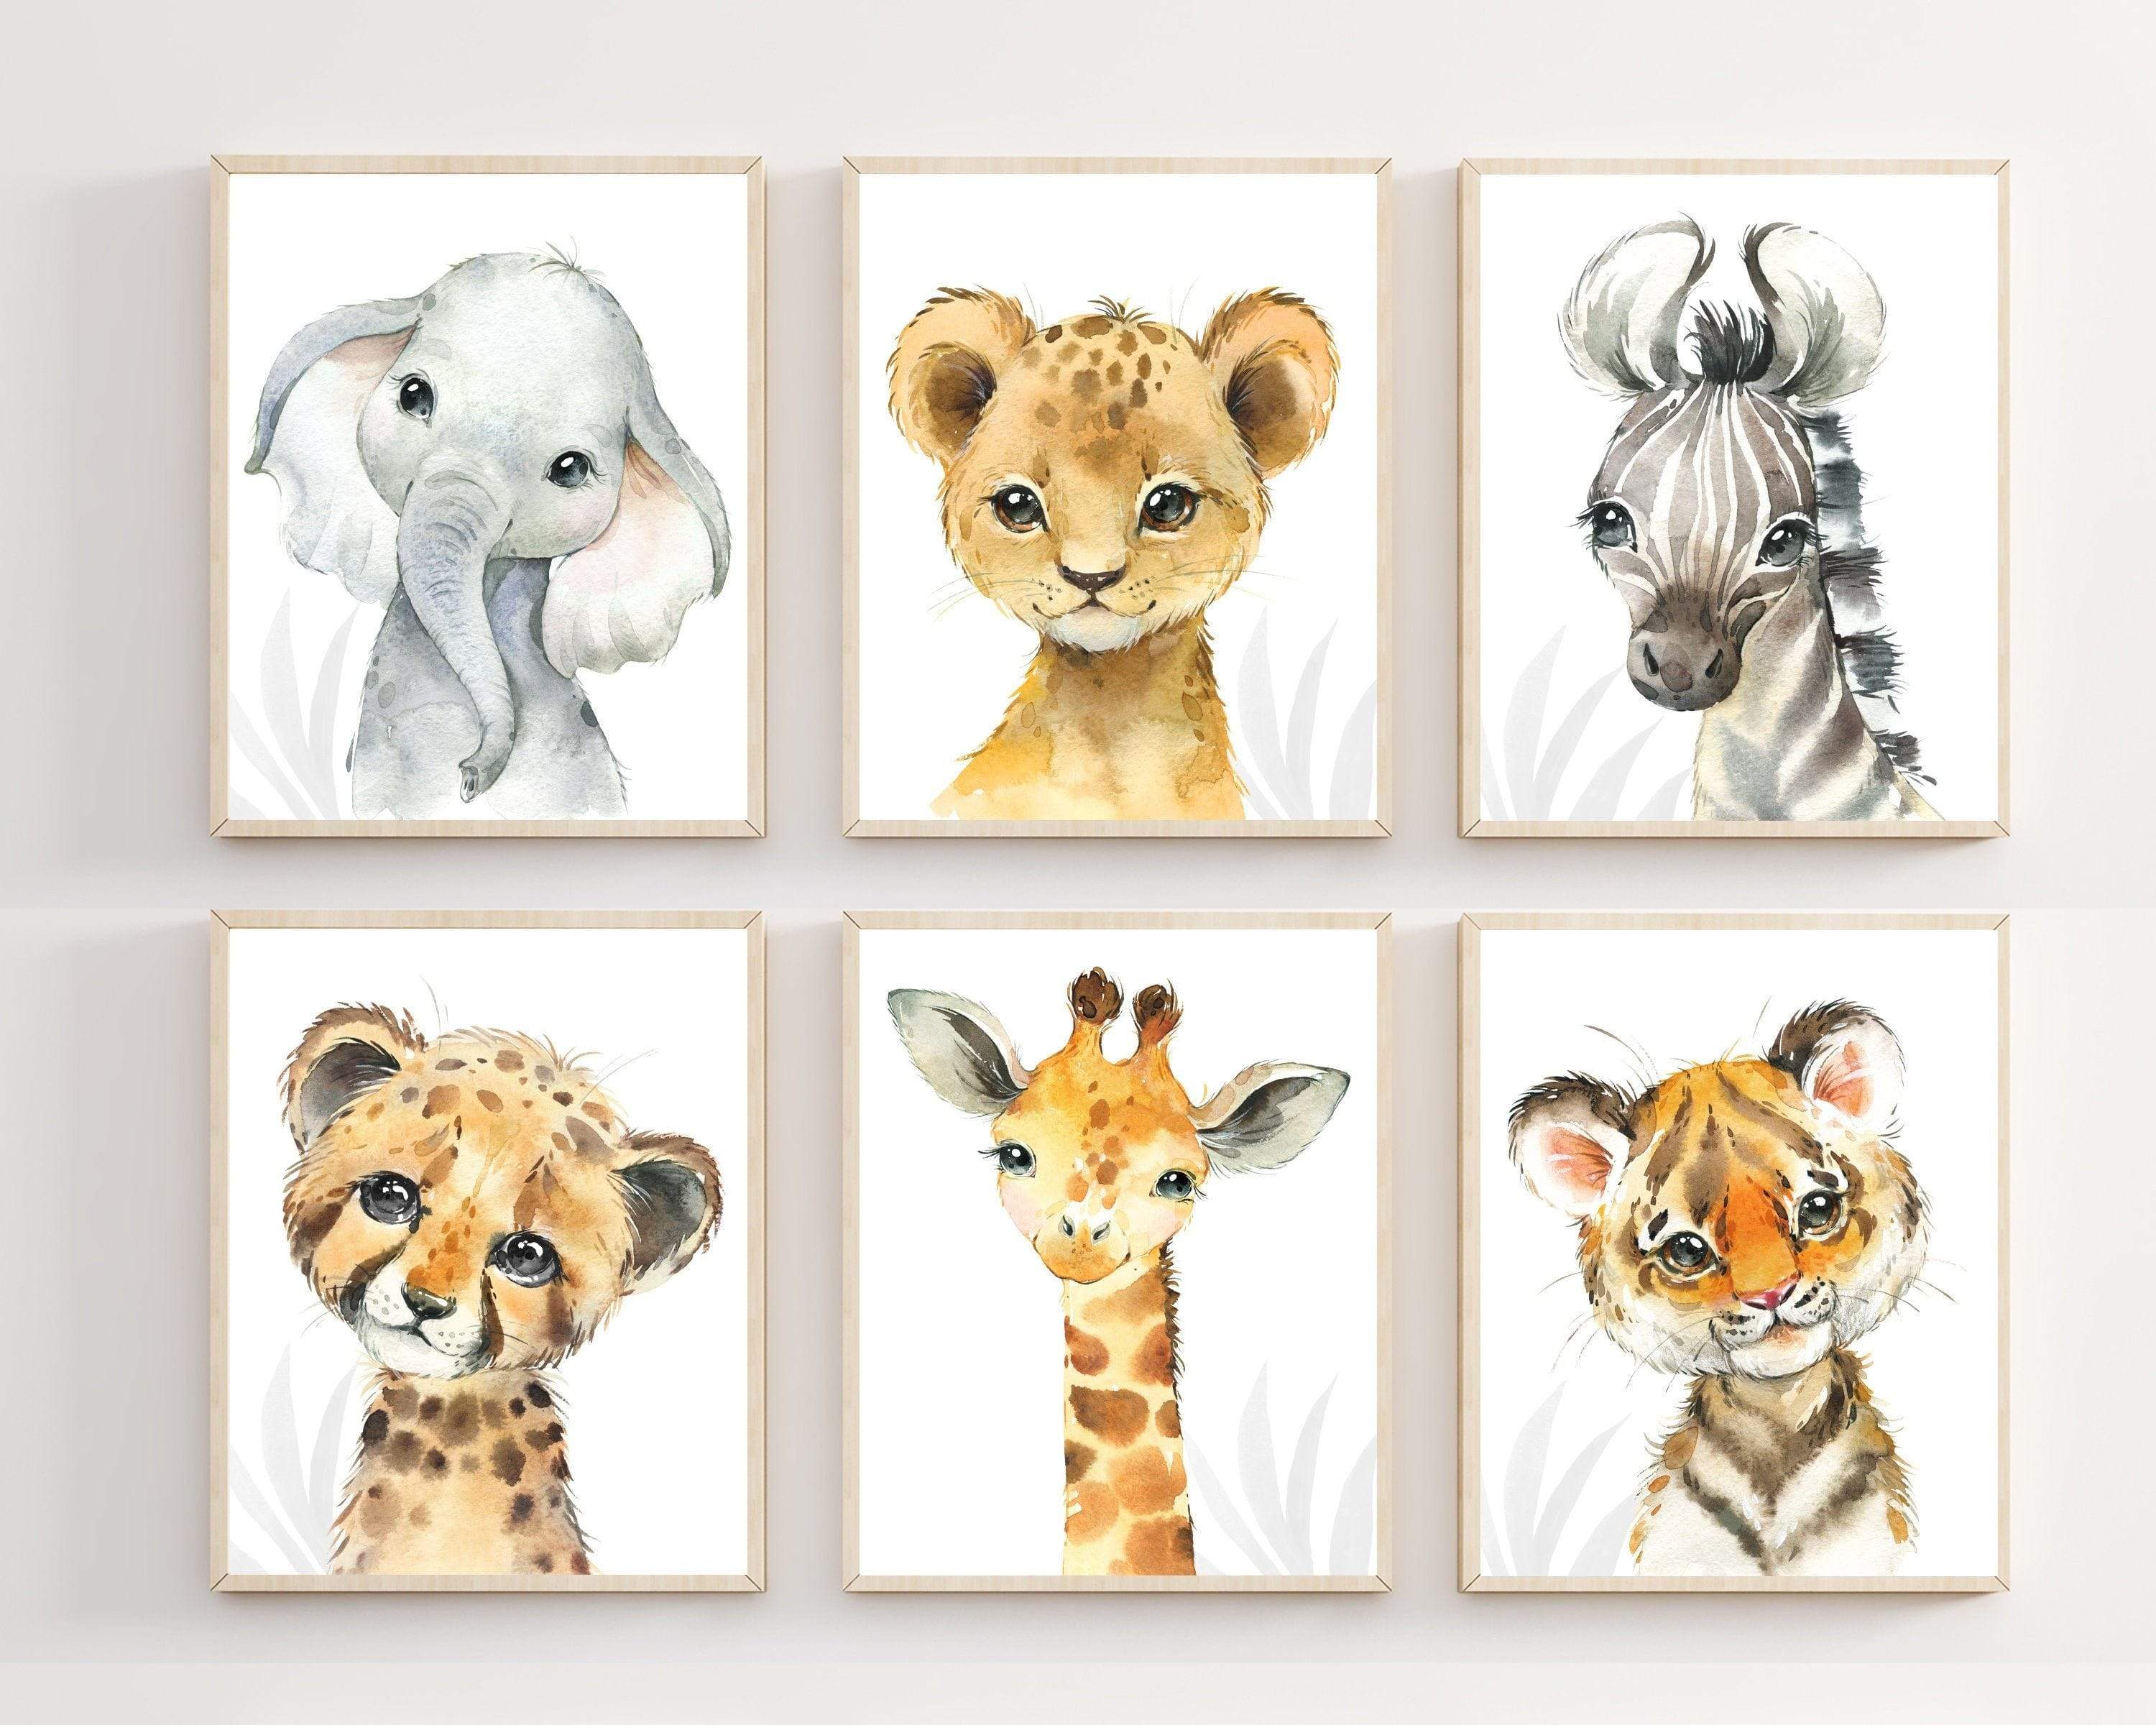 Safari baby animal prints - Safari Animal prints - Watercolor animal prints - Safari nursery decor - Safari Jungle animals - Baby nursery nursery art print baby nursery bedroom decor